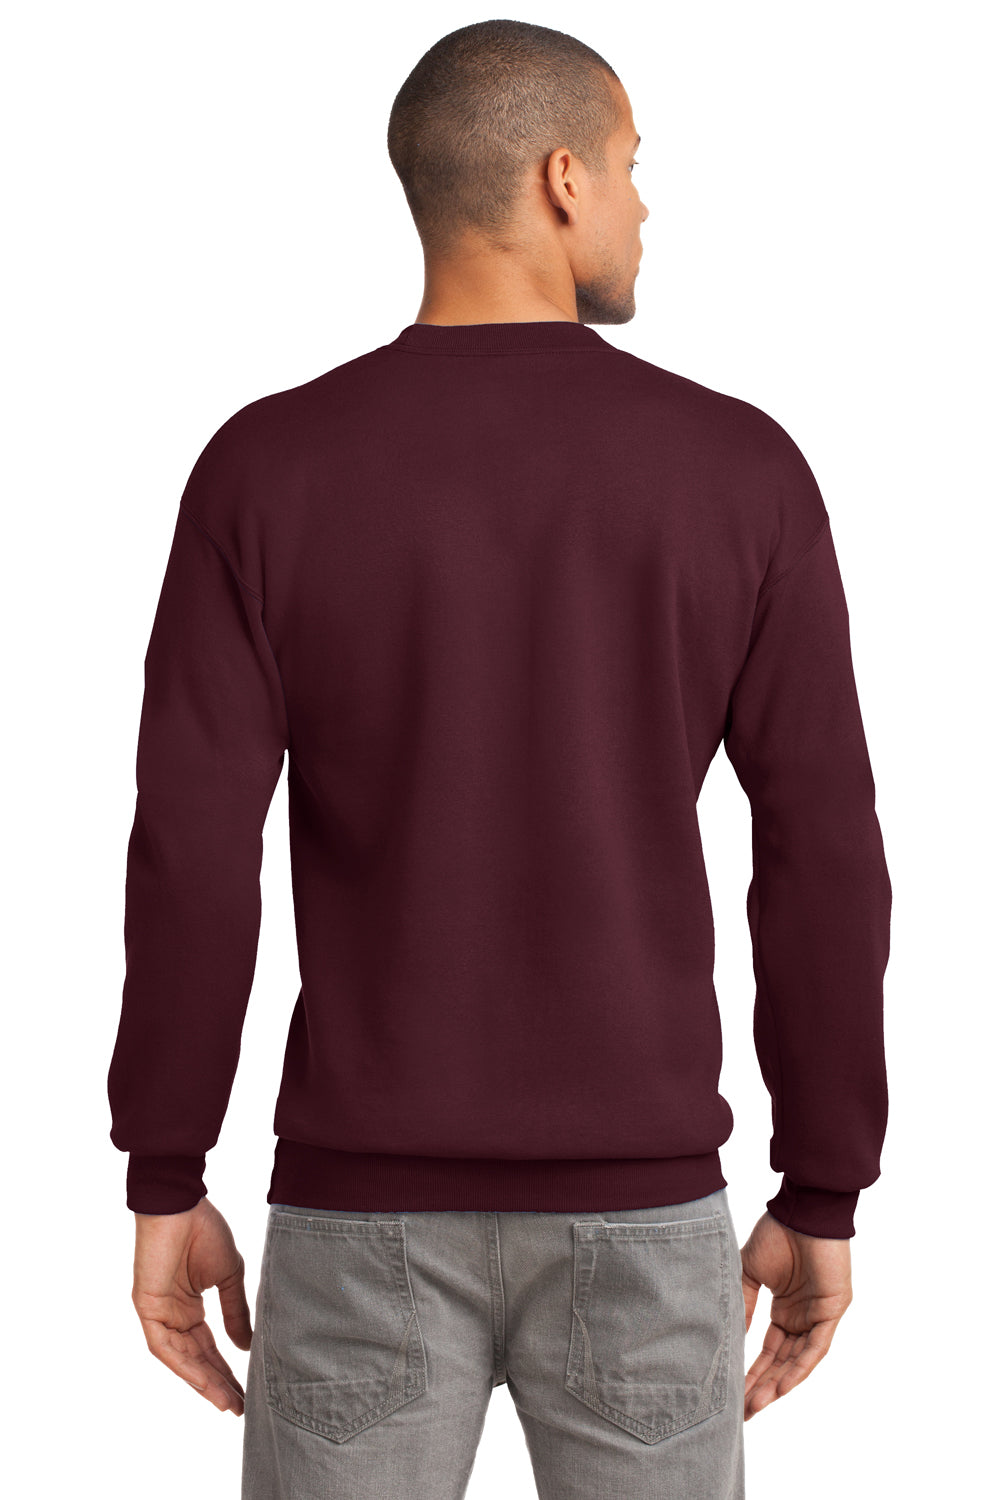 Port & Company PC90 Mens Essential Fleece Crewneck Sweatshirt Maroon Back